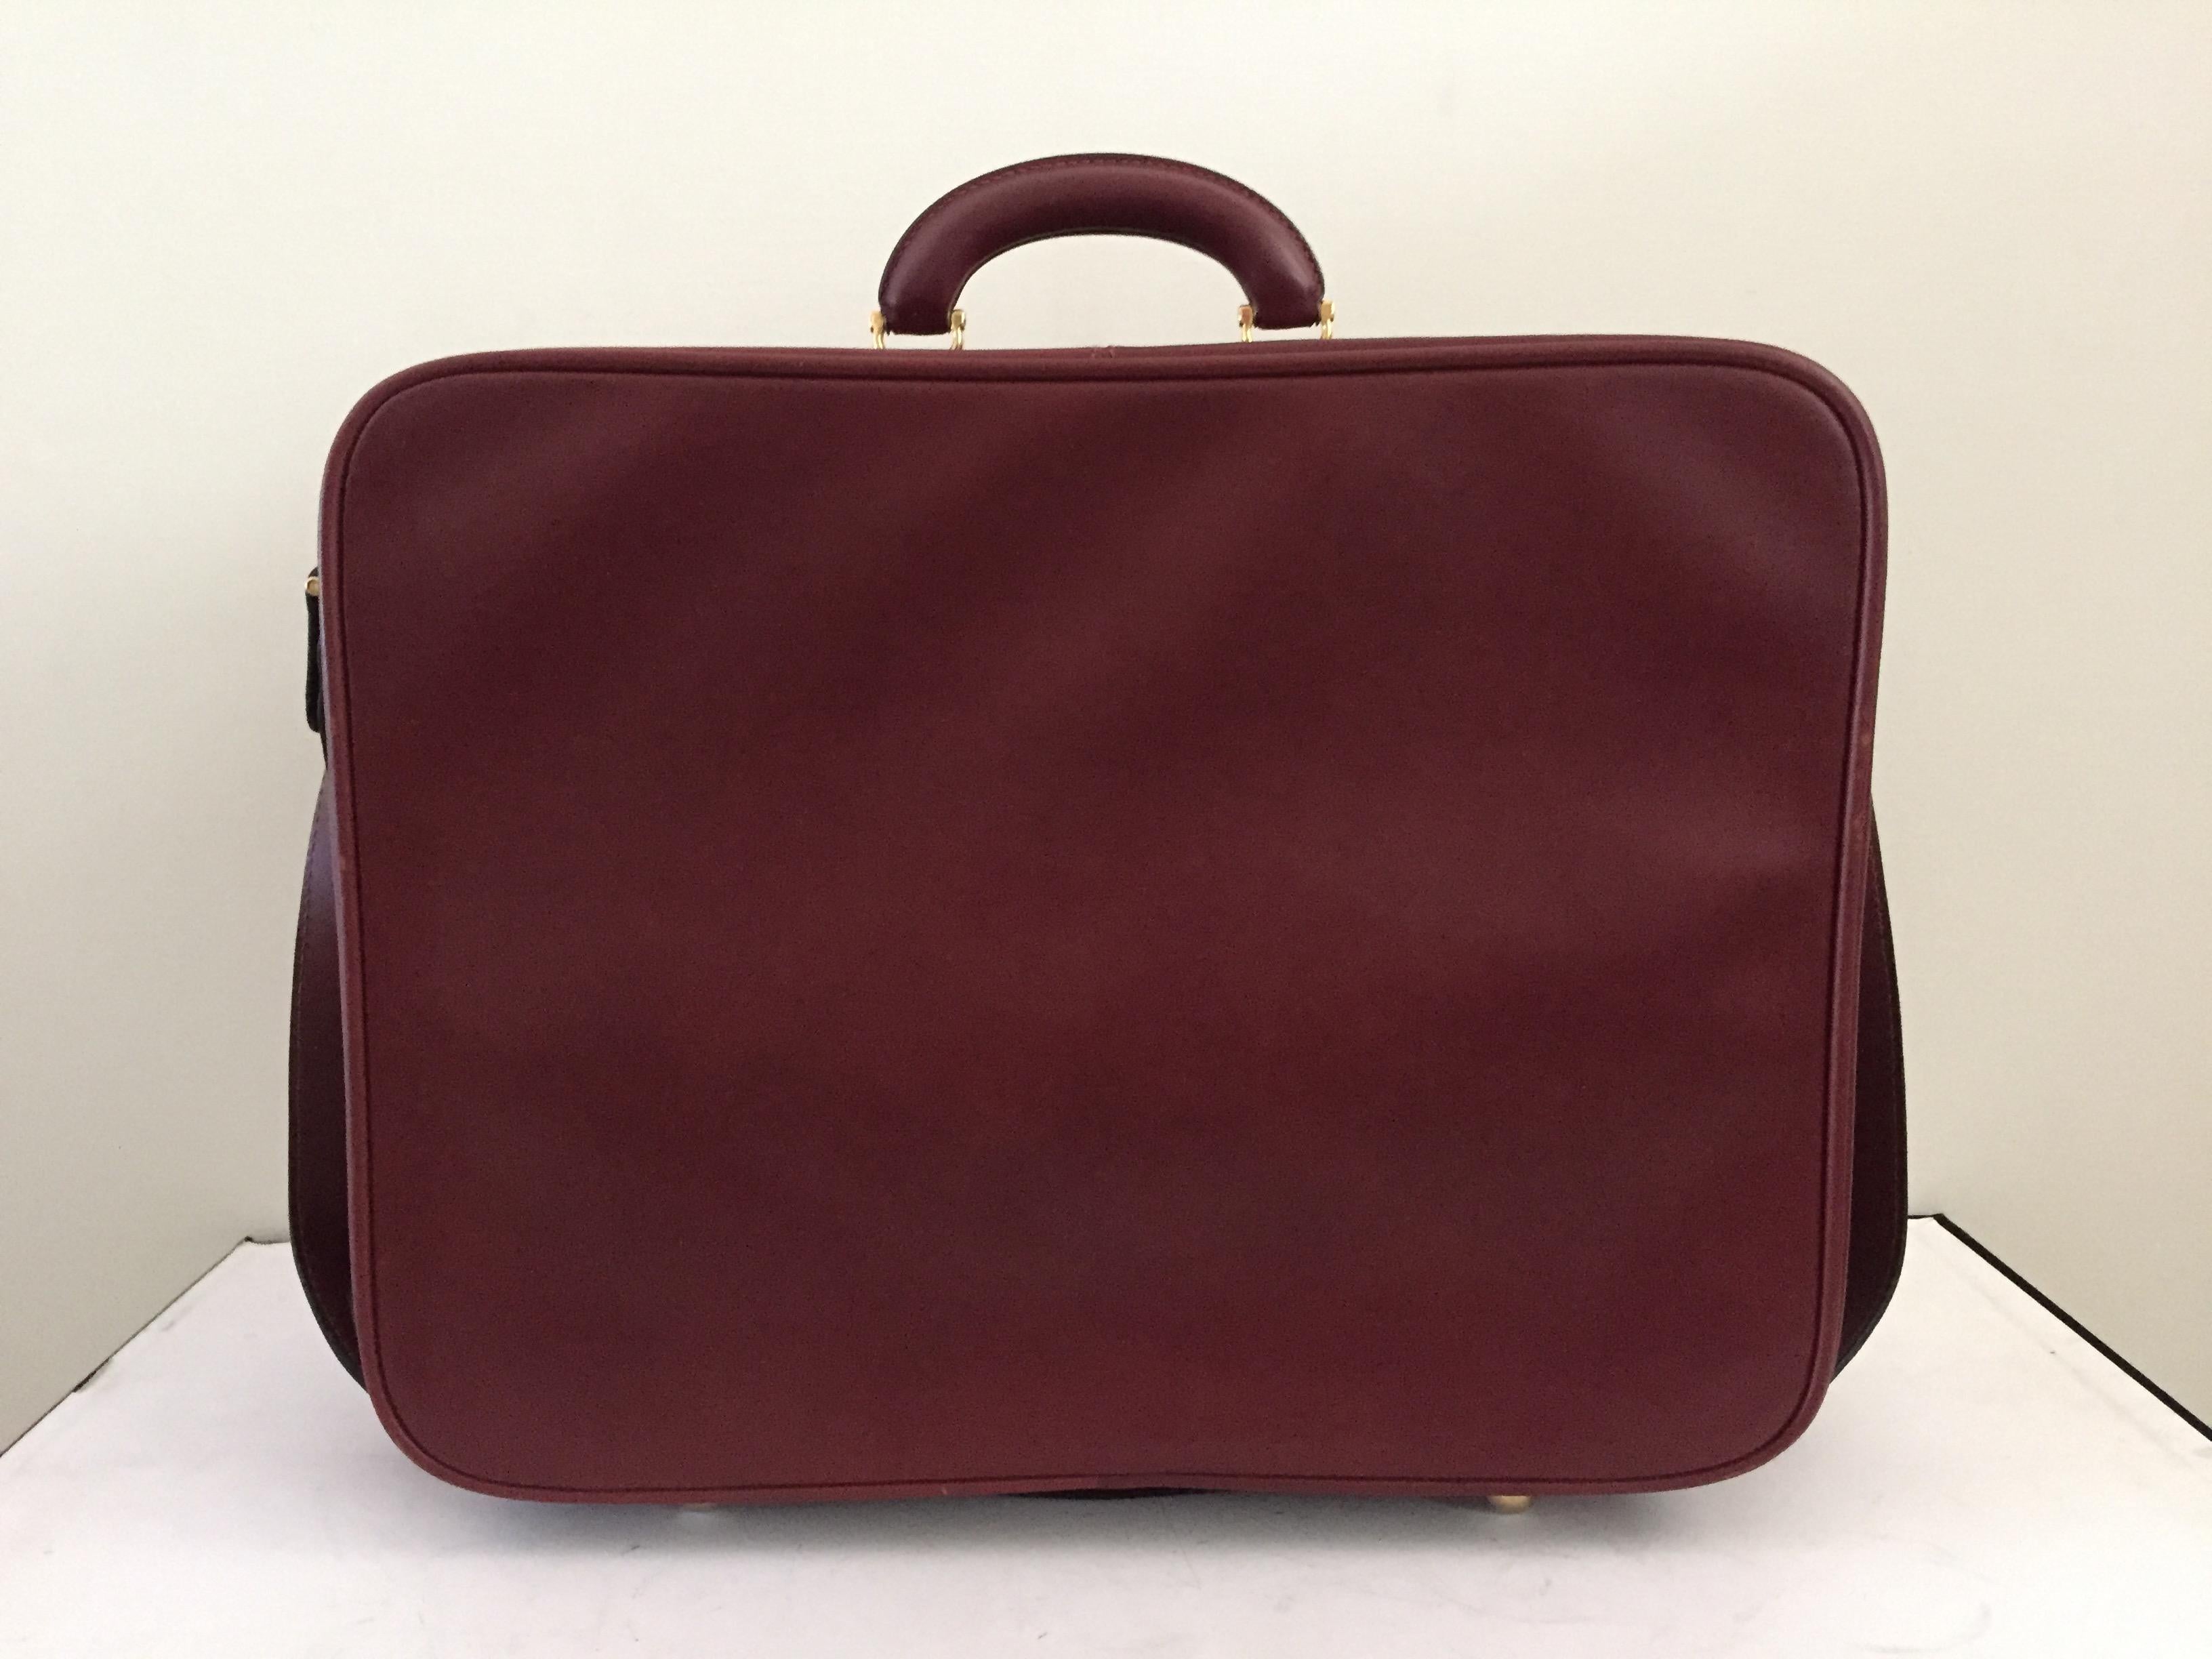 Cartier Les Must de Cartier Burgundy Leather Travel Overnight Suitcase / Luggage 6